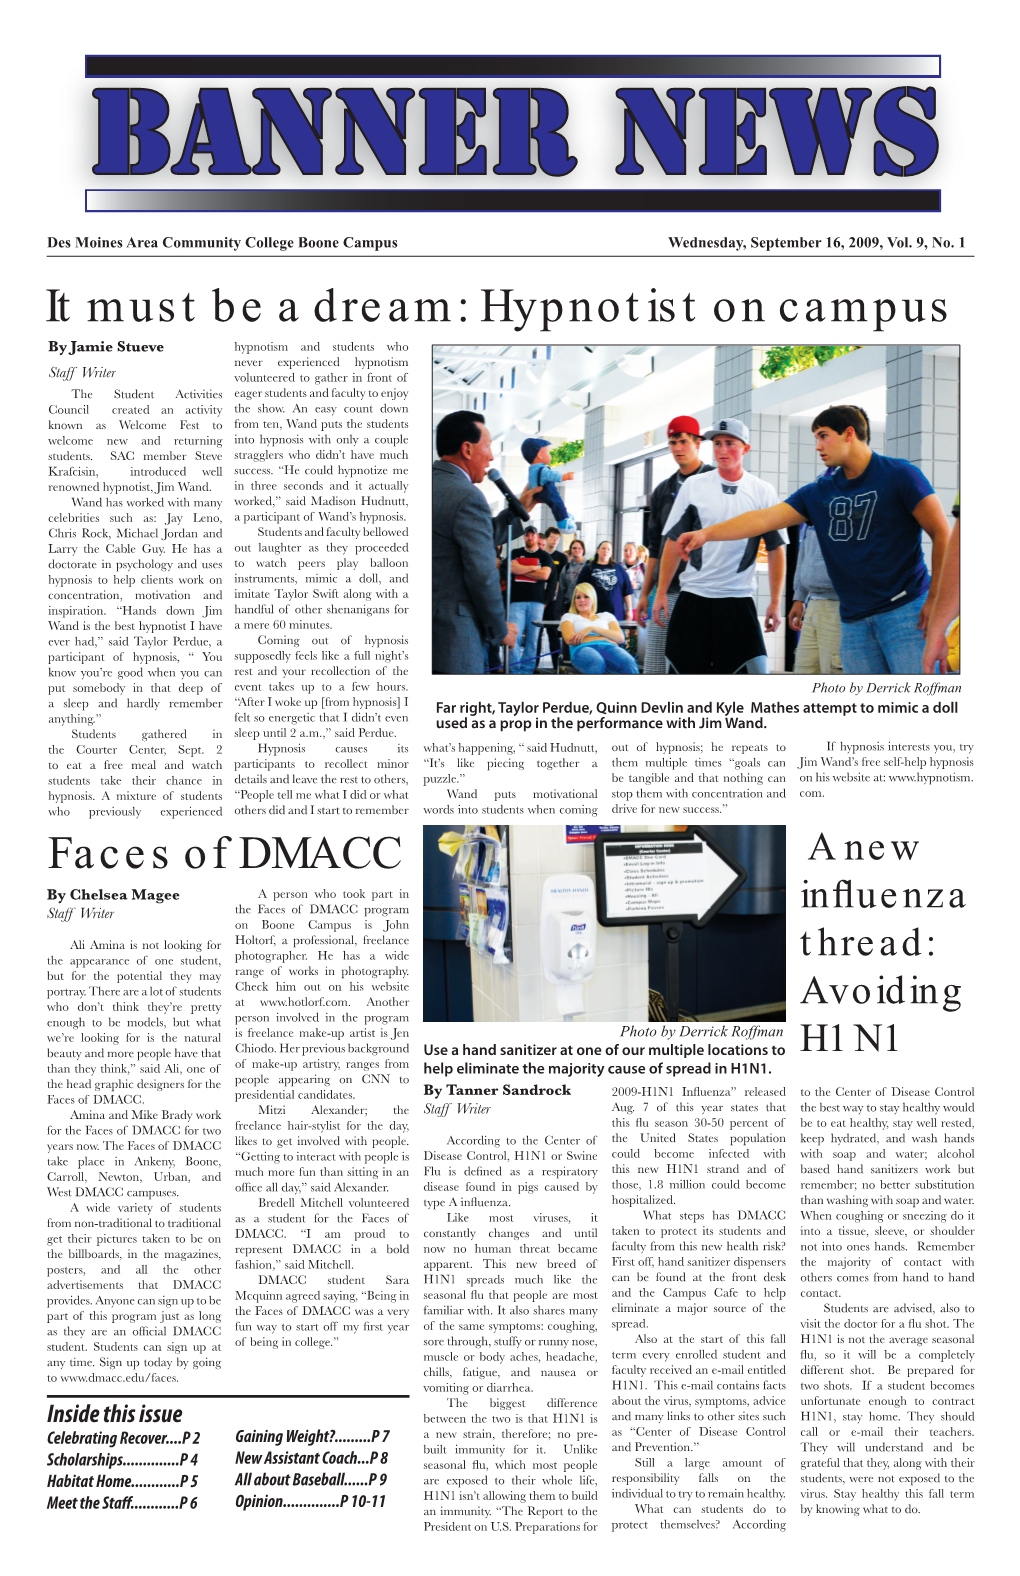 It Must Be a Dream: Hypnotist on Campus